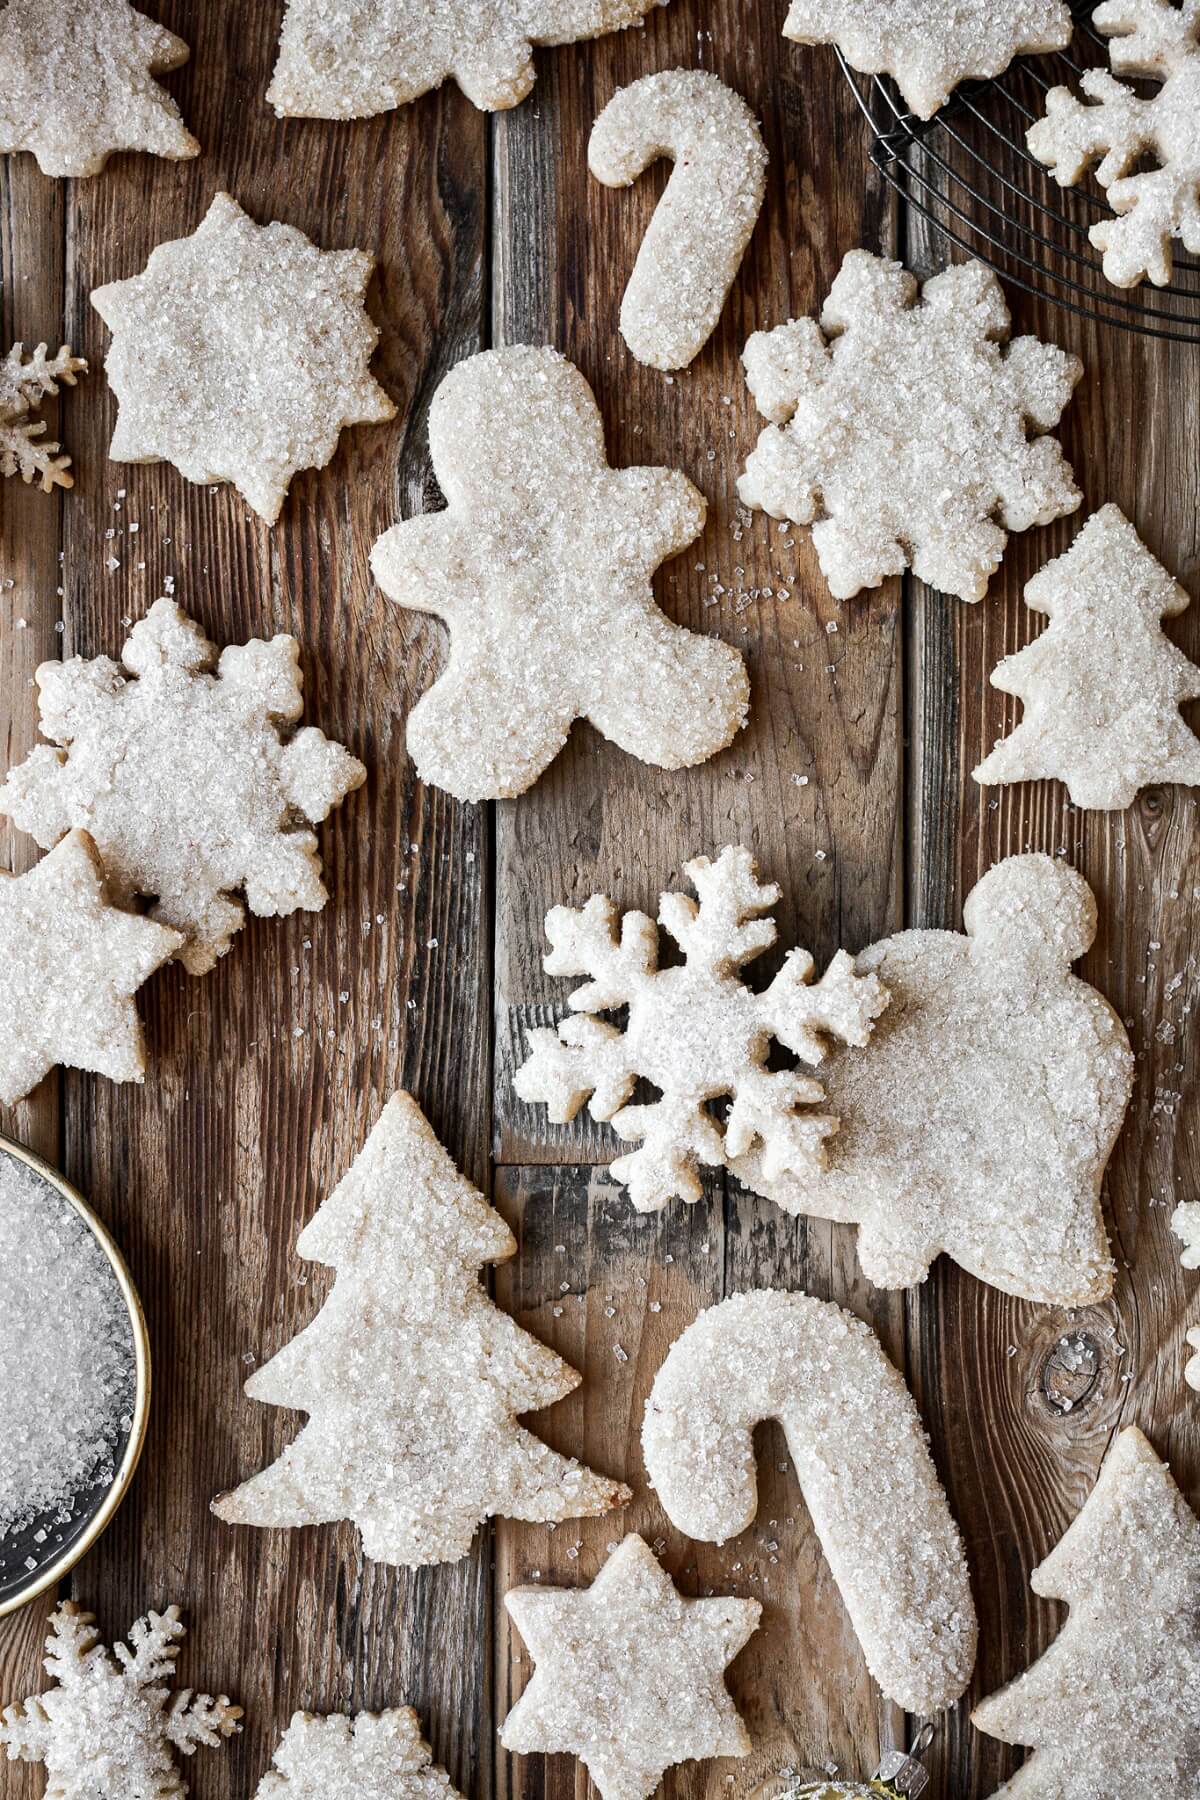 Sugar crusted Christmas cutout cookies.